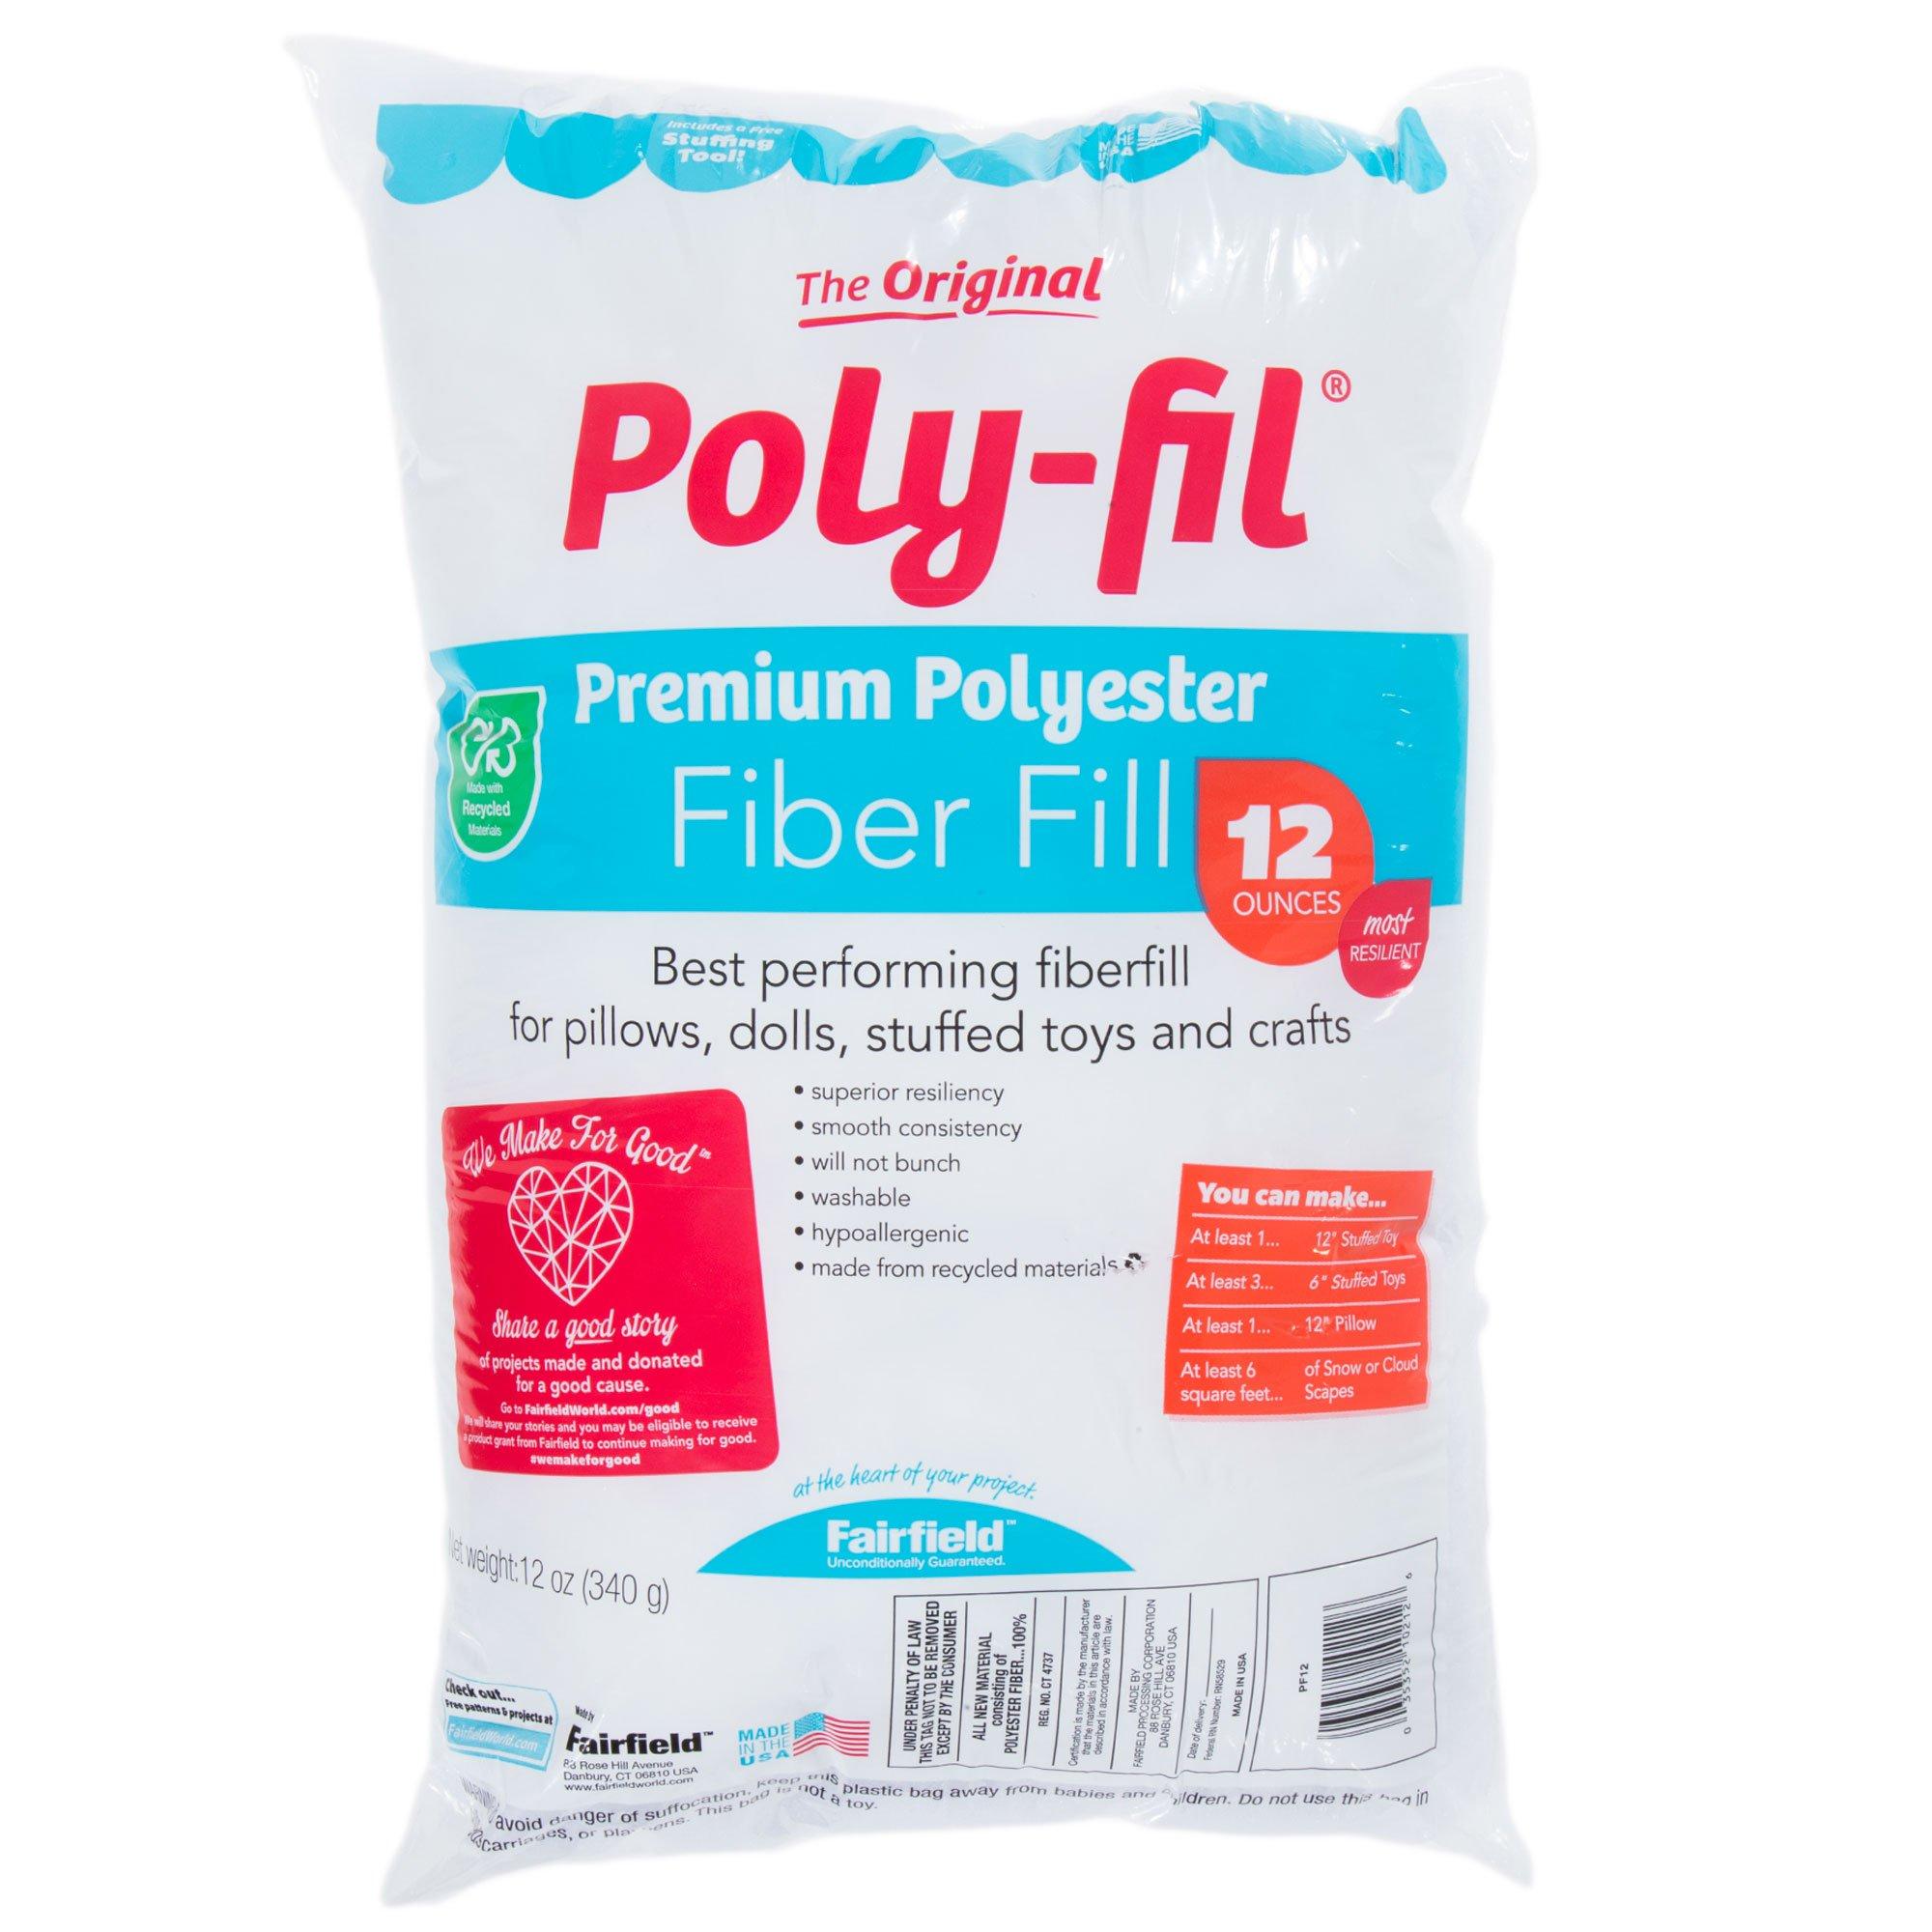 Kollase Polyester Fiberfill, 7oz/200g Premium Fiber Filling Stuffing,  Stuffed Animal Stuffing, Pillow Fluff Stuffing, Filling for Pillow, Stuffed